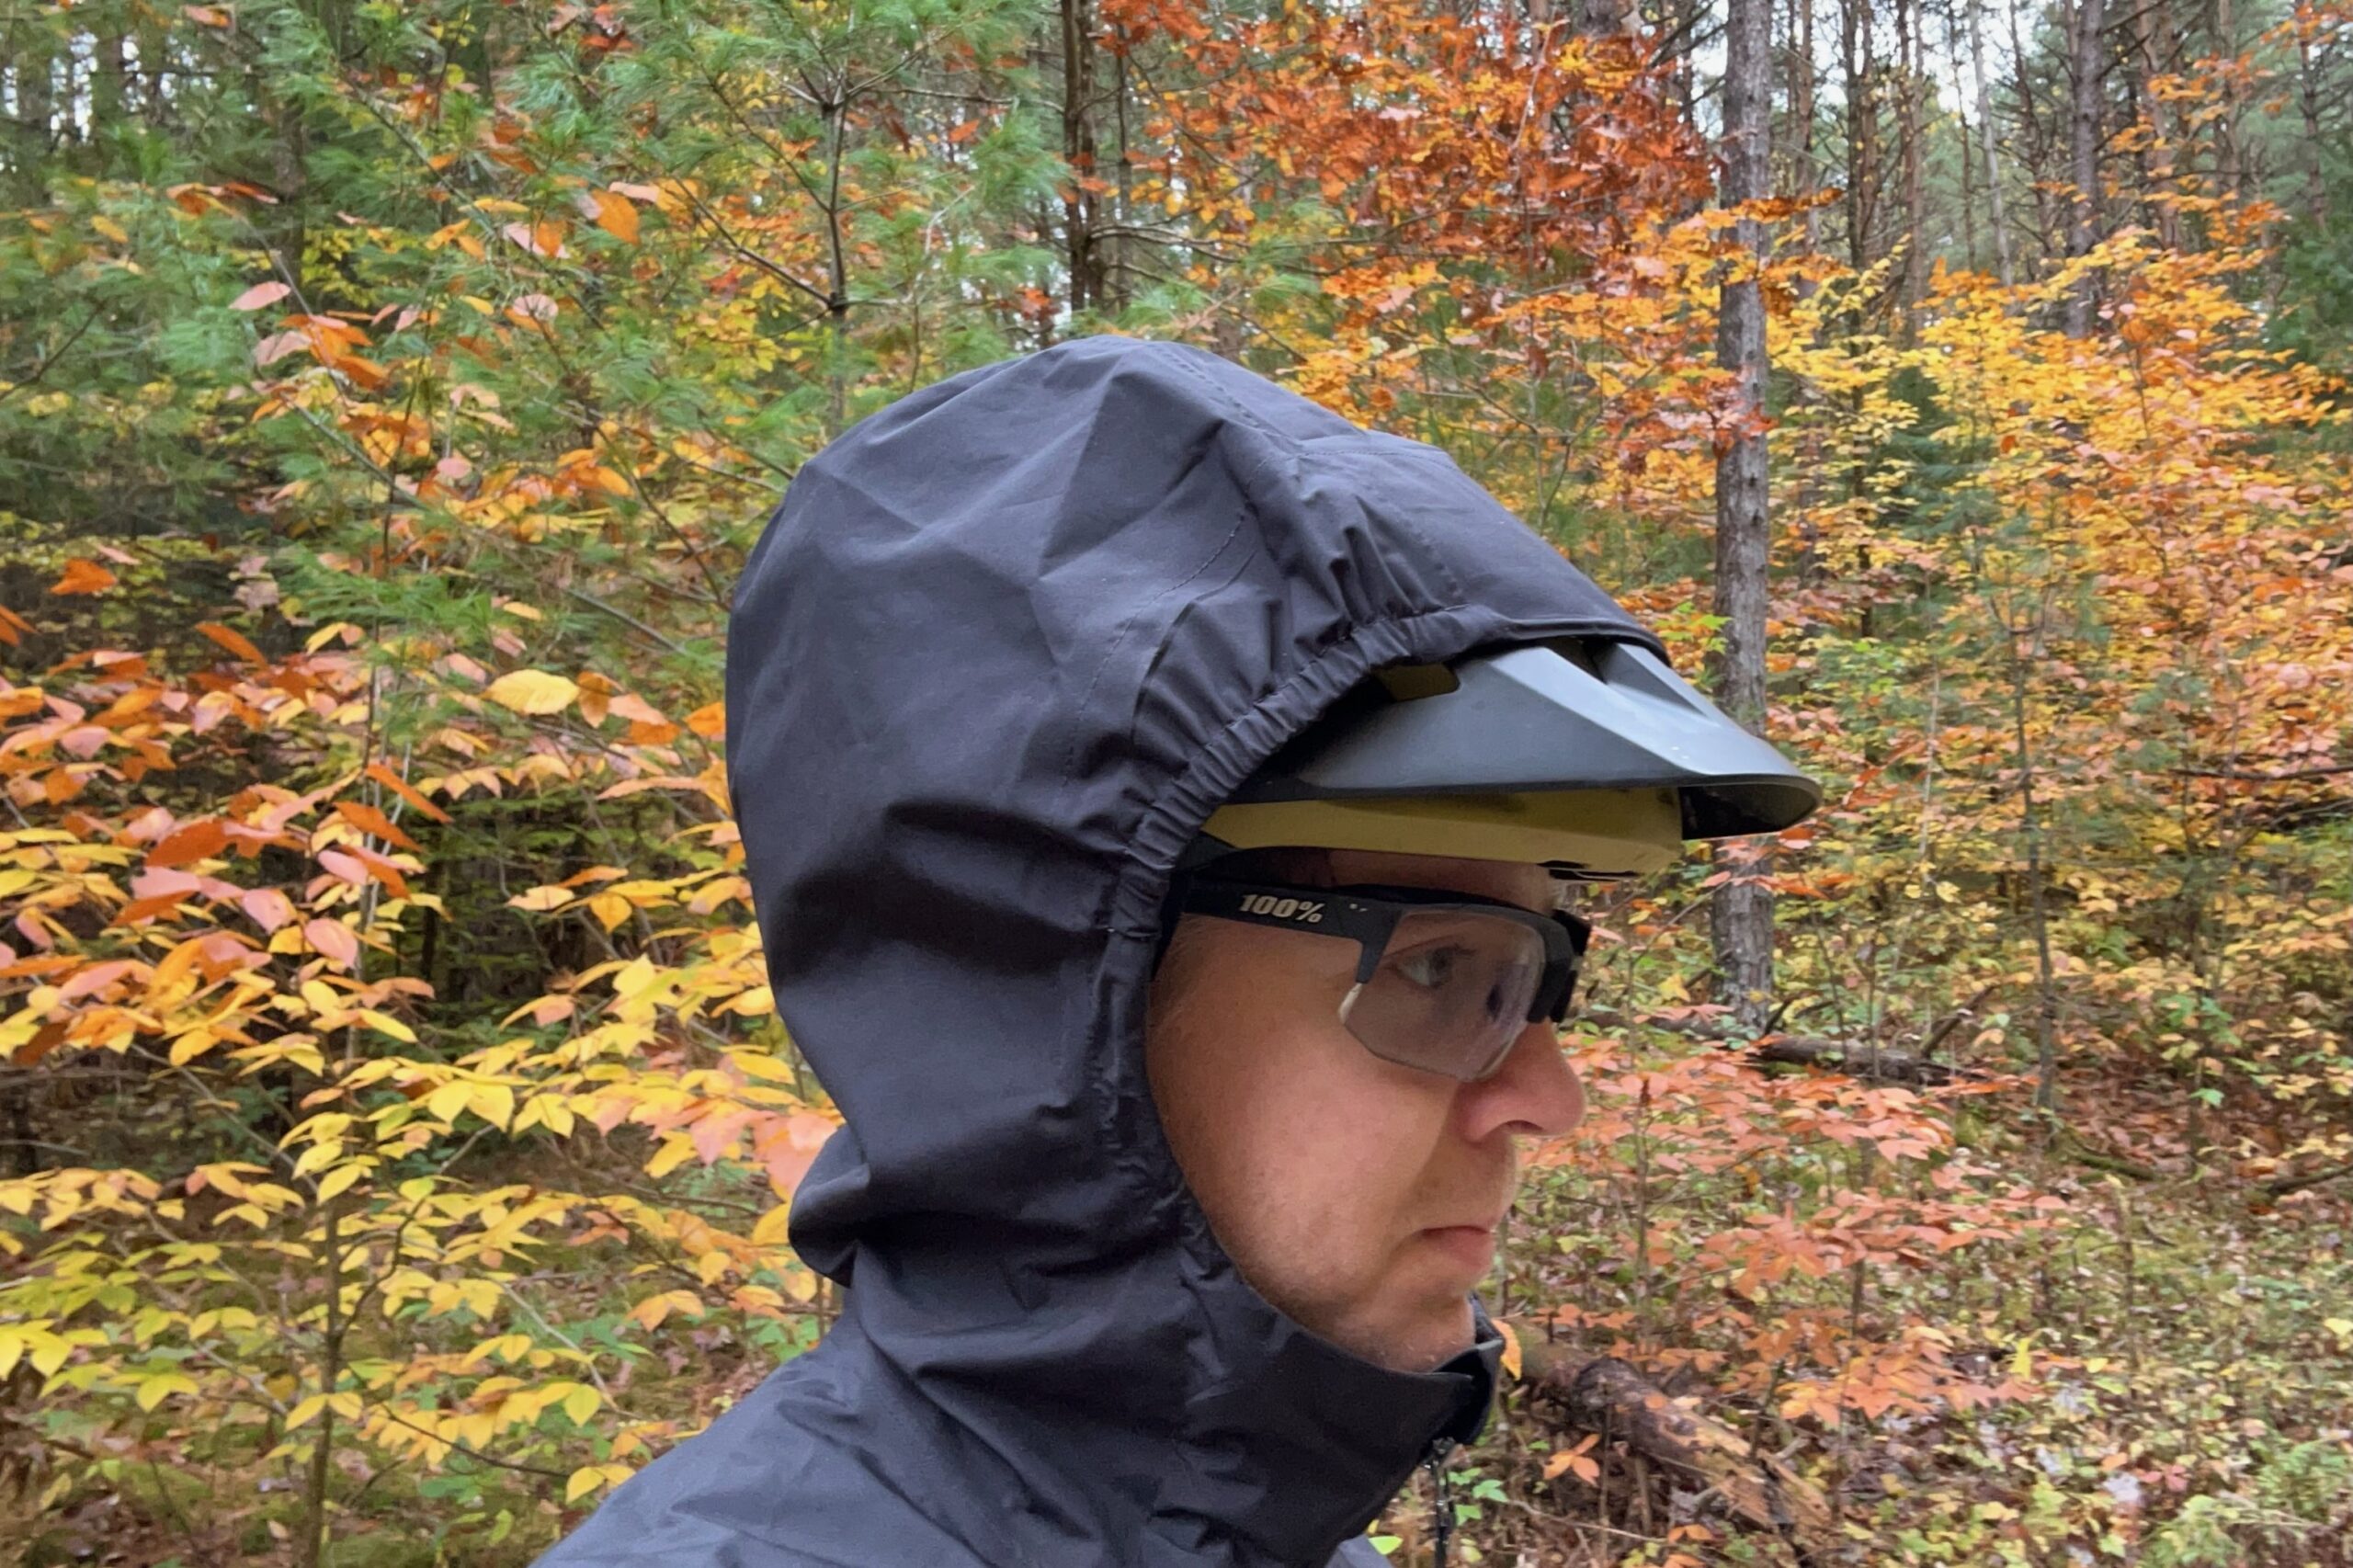 The hood of the Gorewear Endure jacket shown up over a mountain bike helmet